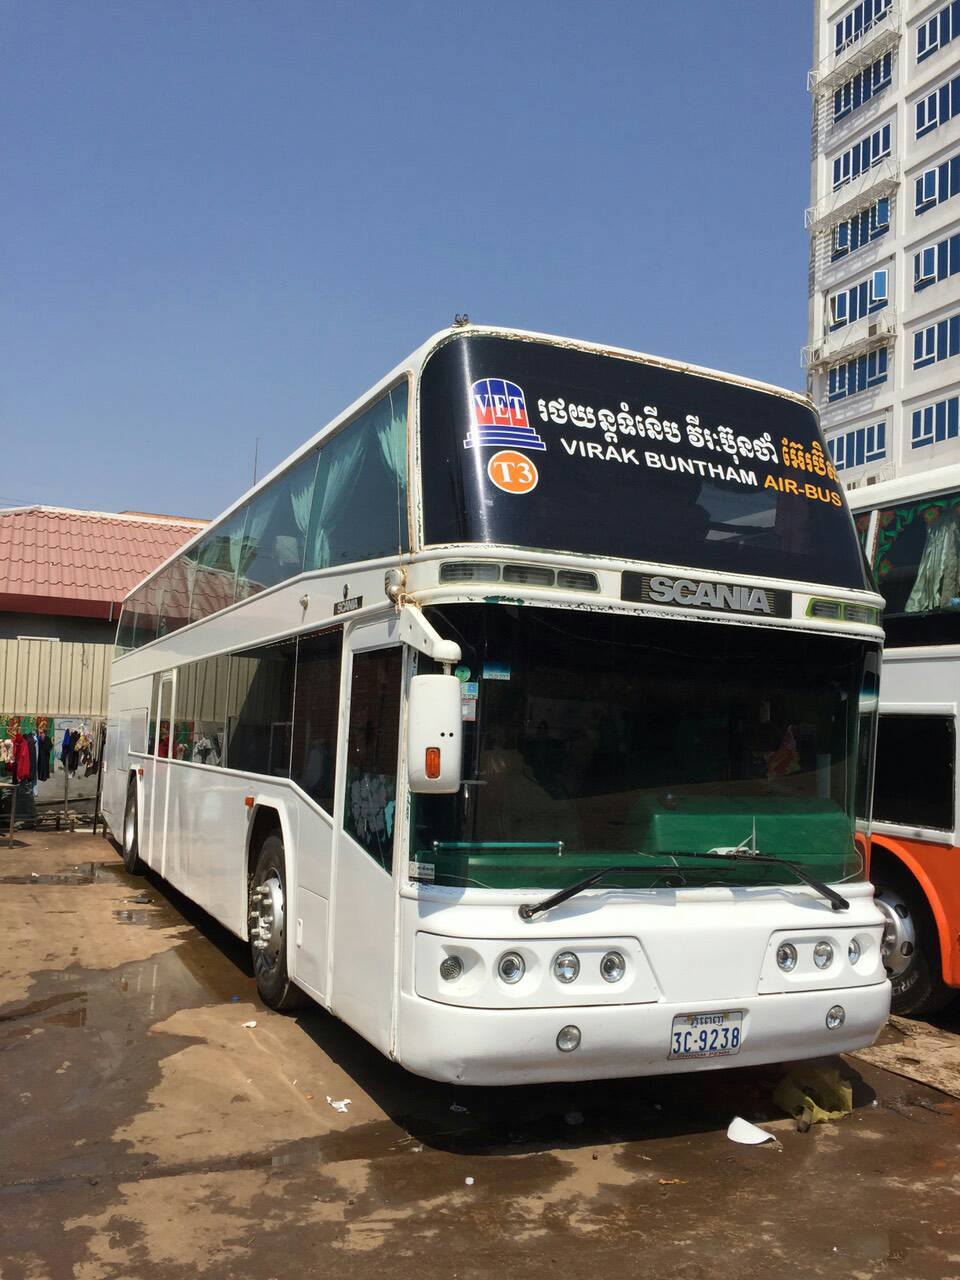 Direct Bus Thailand to Cambodia